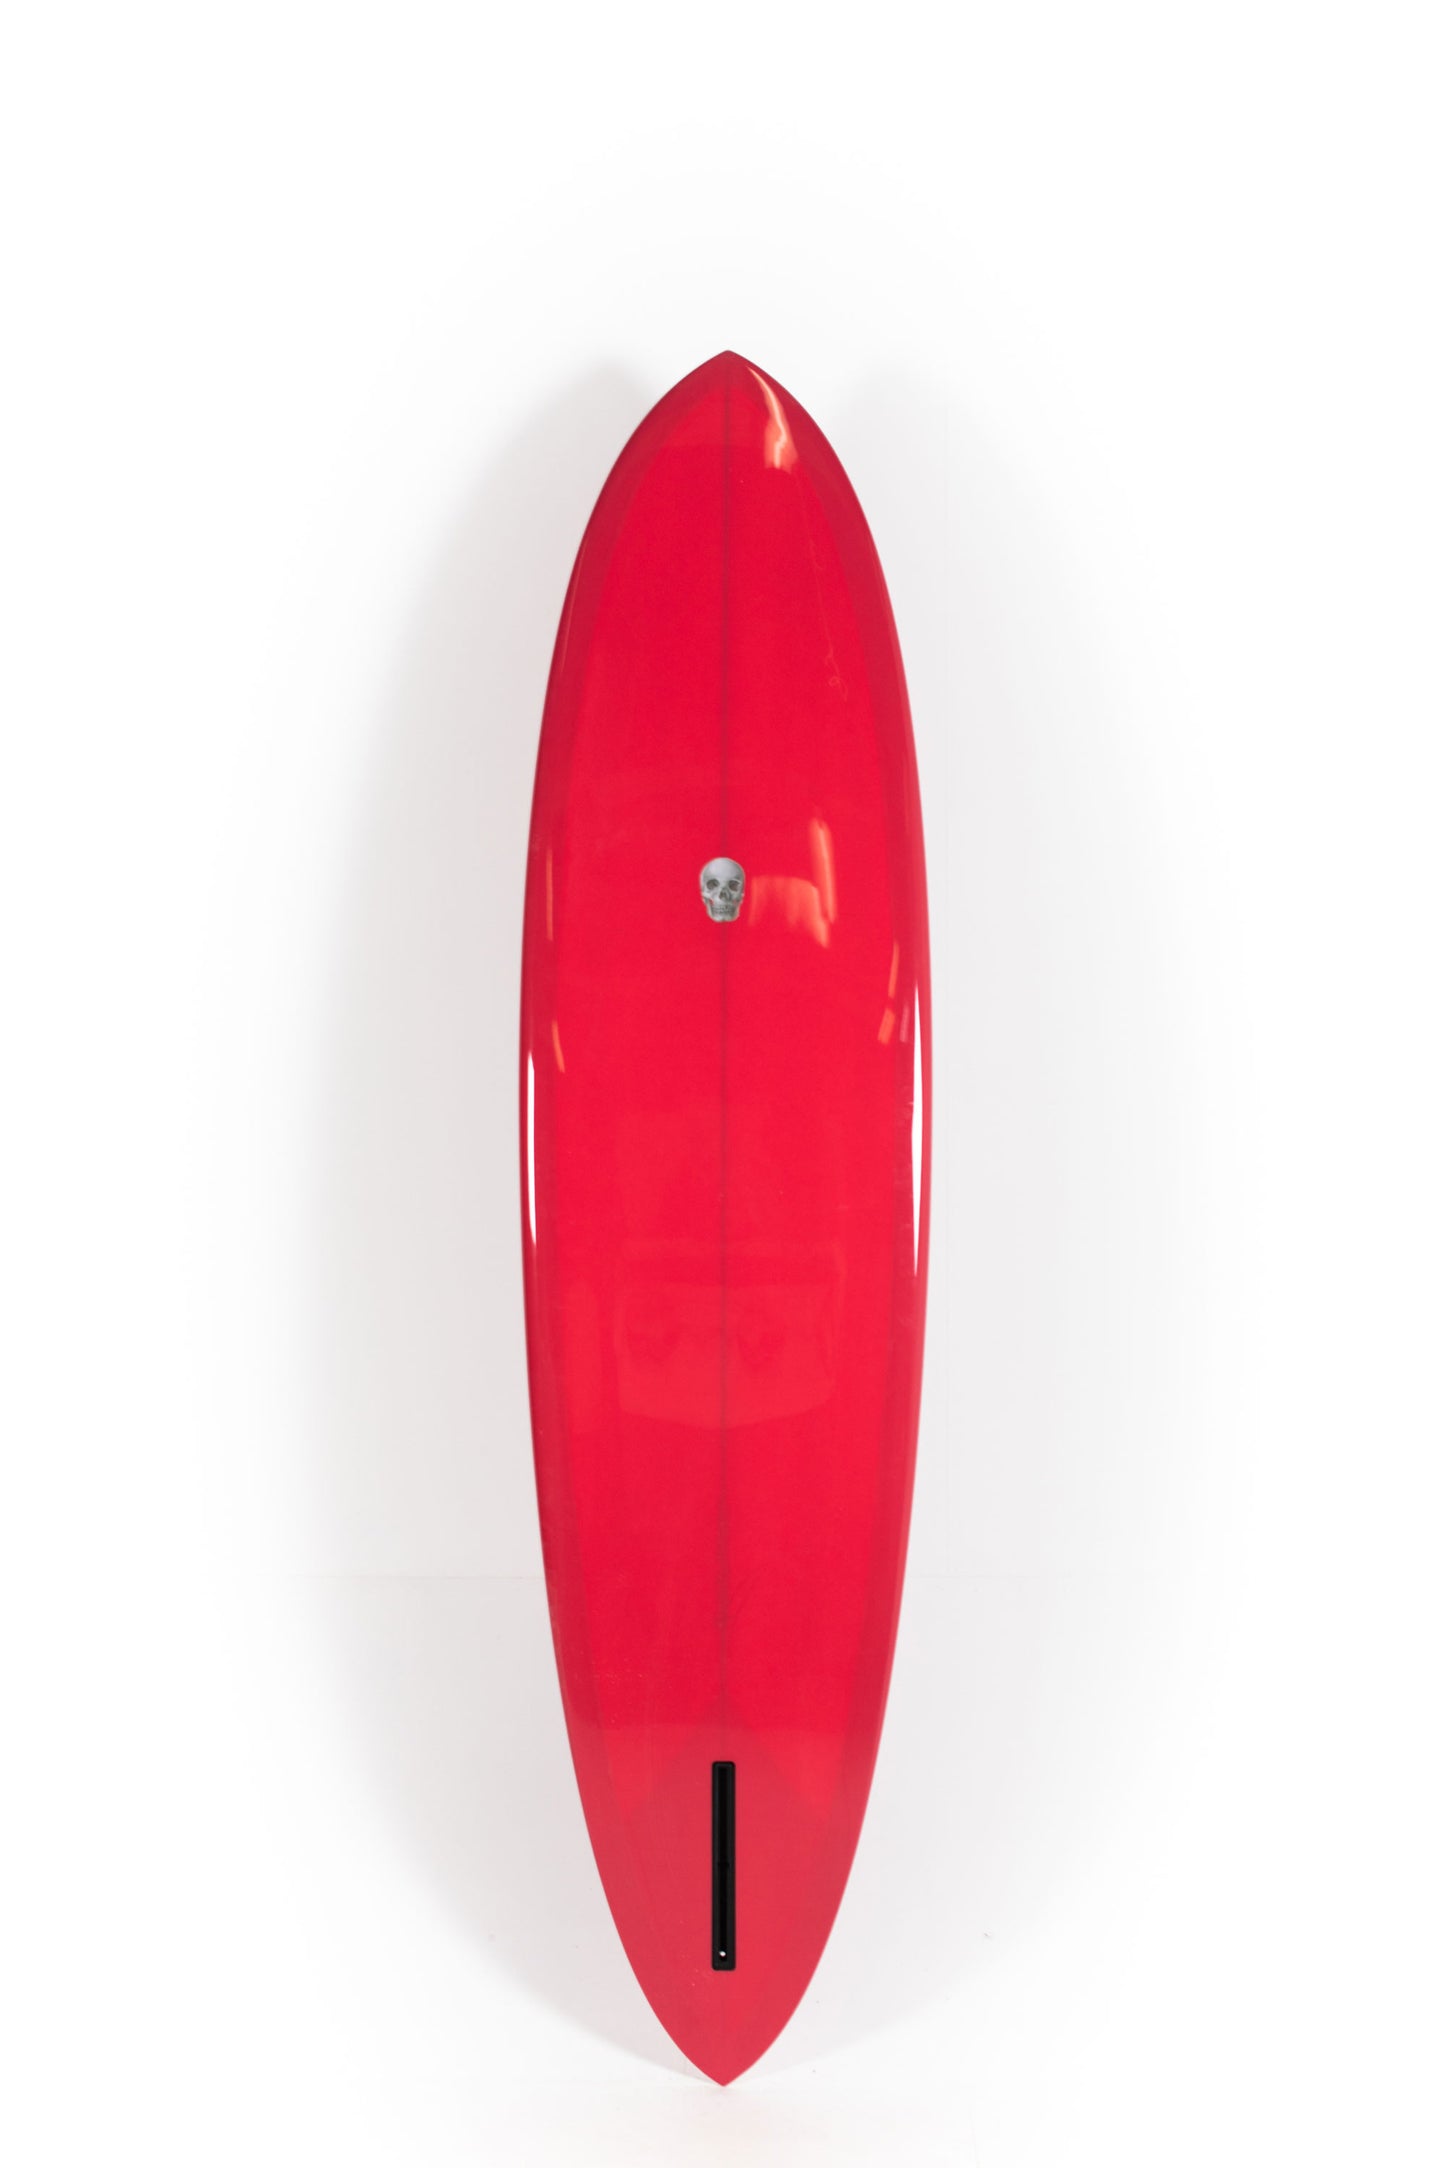 Pukas Surf Shop - Christenson Surfboards - C-BUCKET - 7'6" x 21 1/4 x 2 3/4 - CX05022